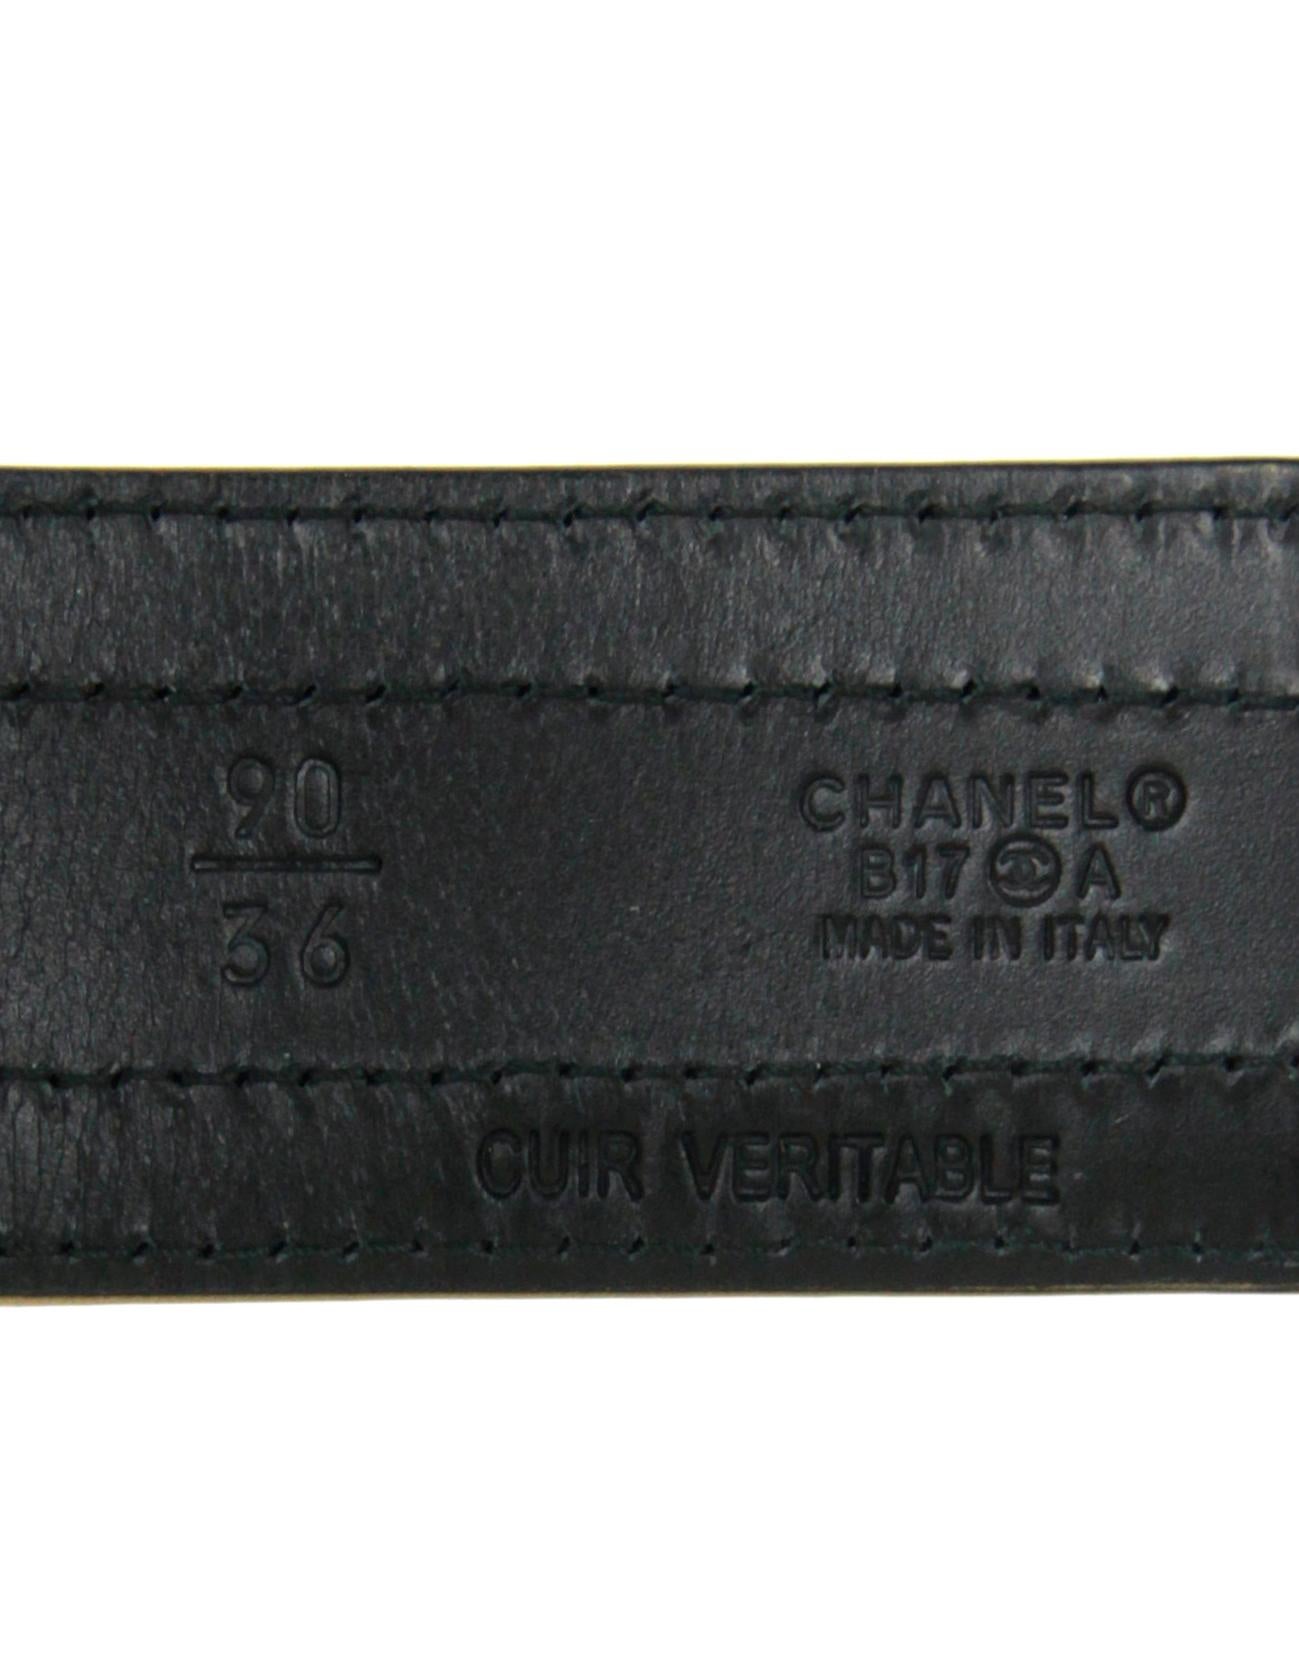 Chanel NWT Black Leather & Grosgrain Pearl Belt sz 90 rt. $1, 850 1